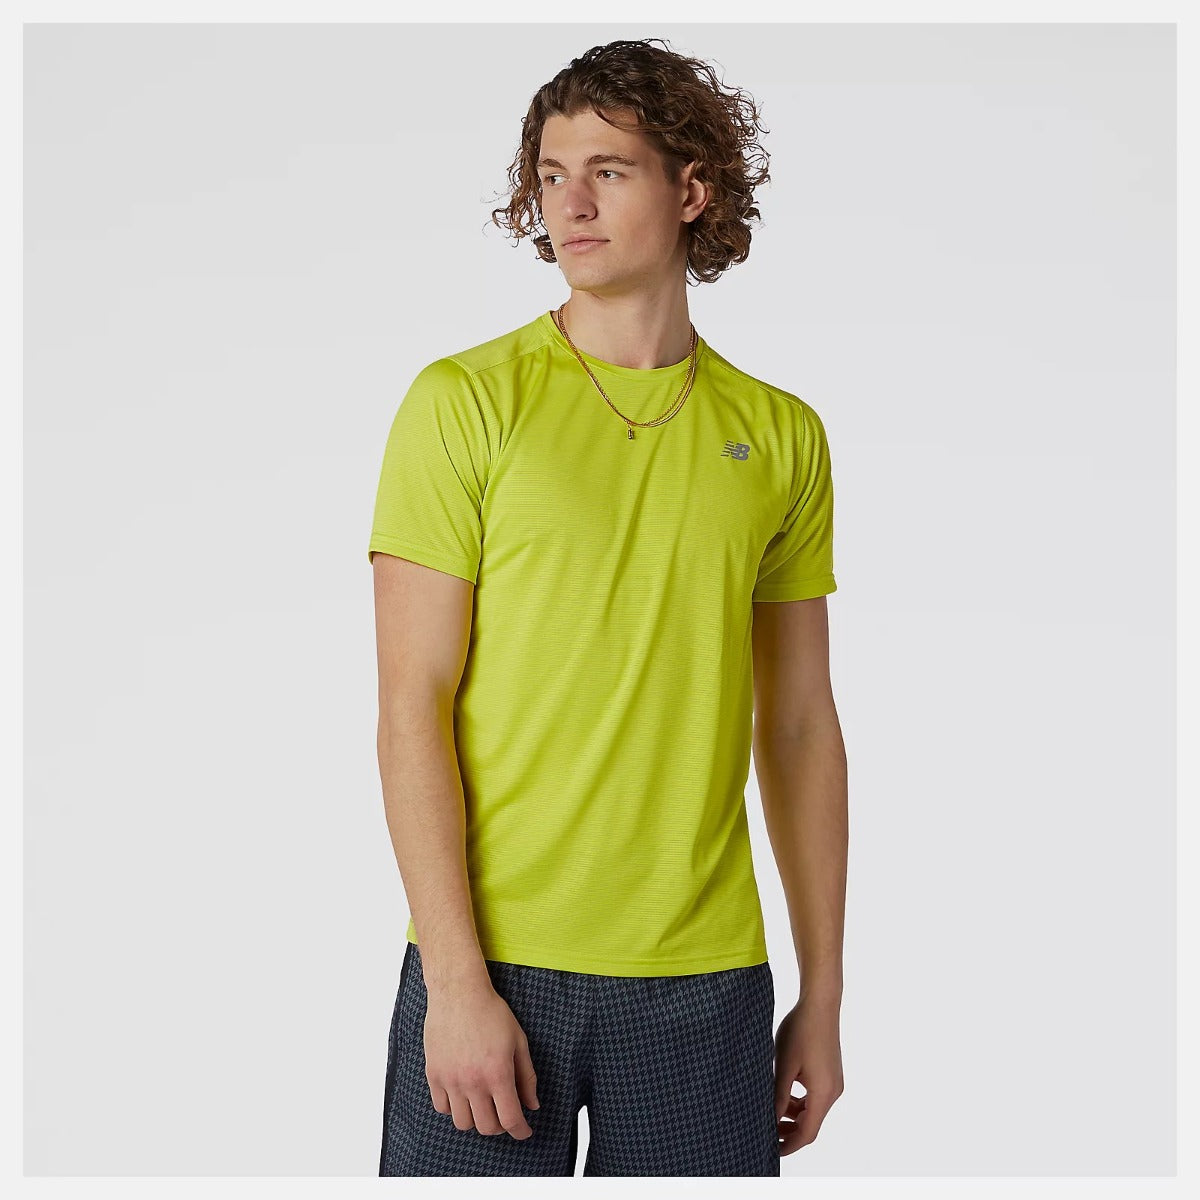 New Balance Accelerate T-shirt Mens (Sulphur Yellow)